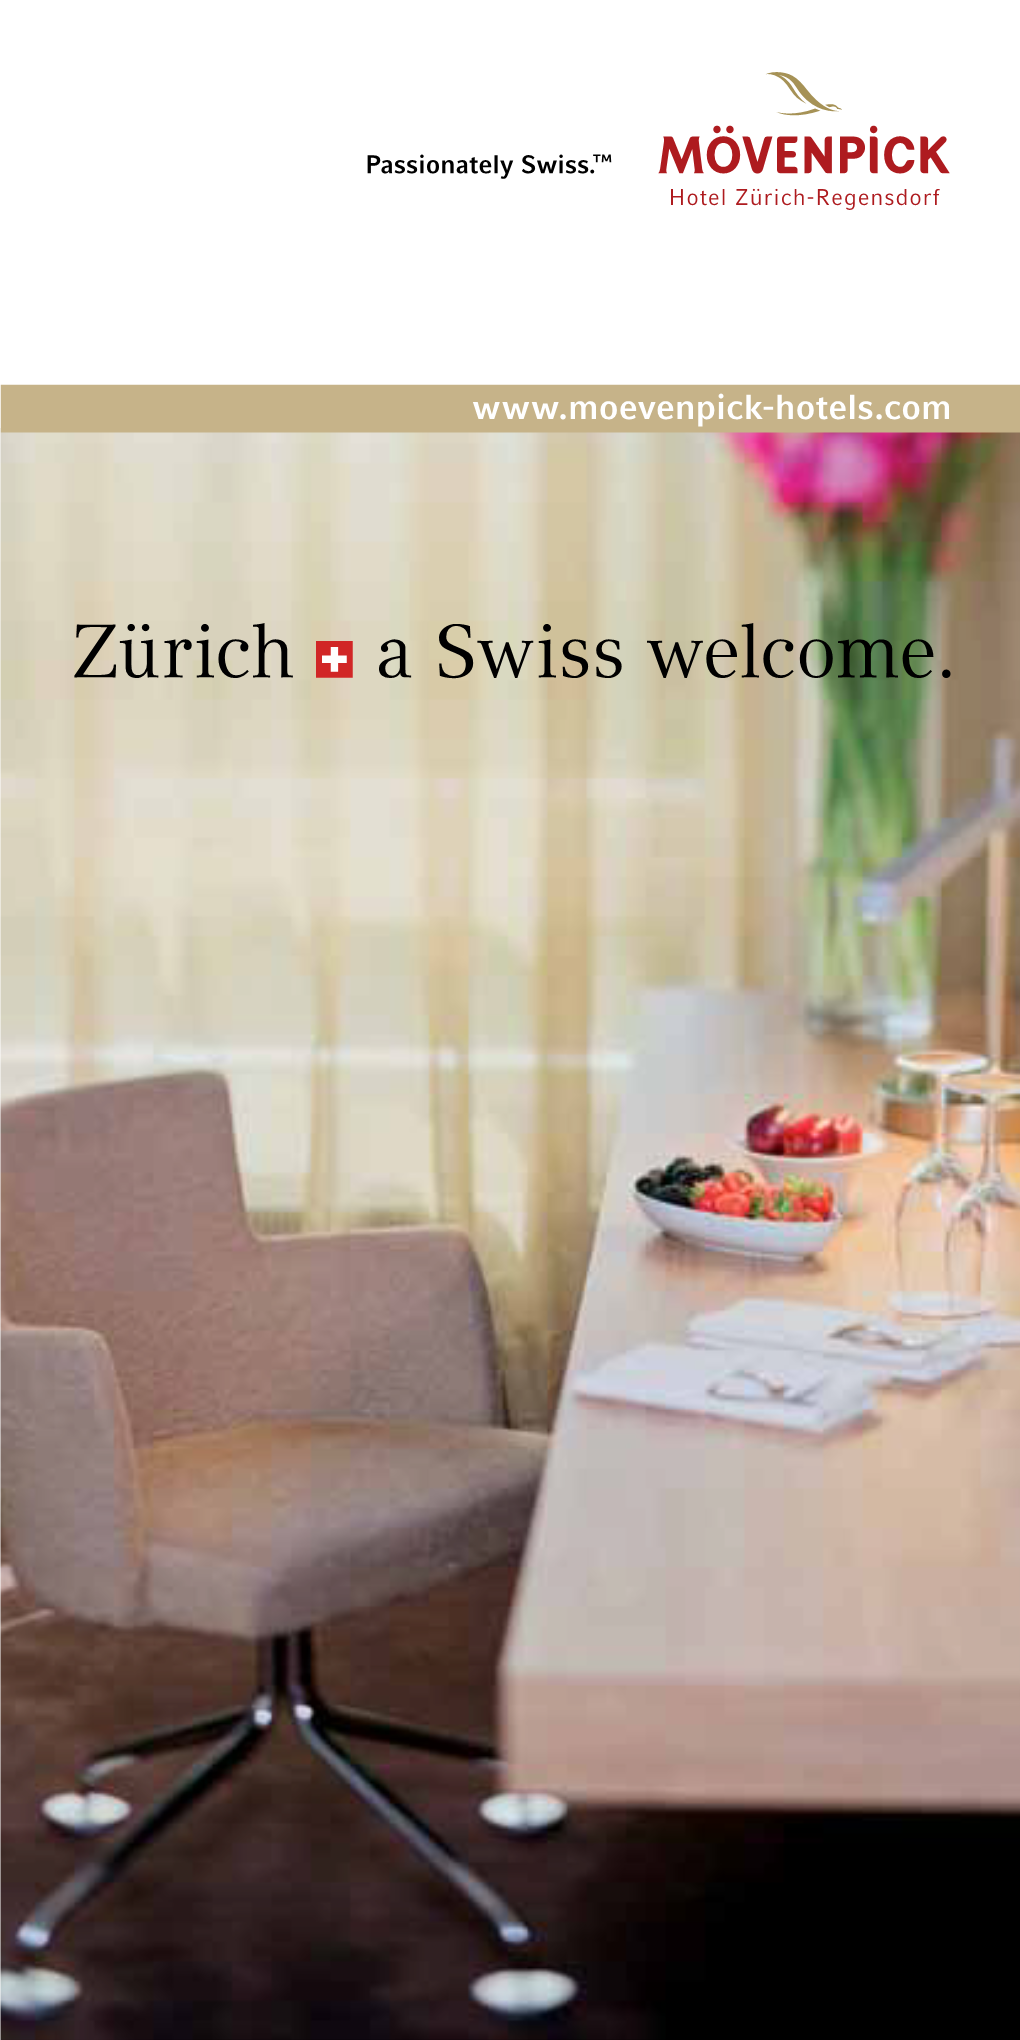 Zürich a Swiss Welcome. Service Passionately Swiss